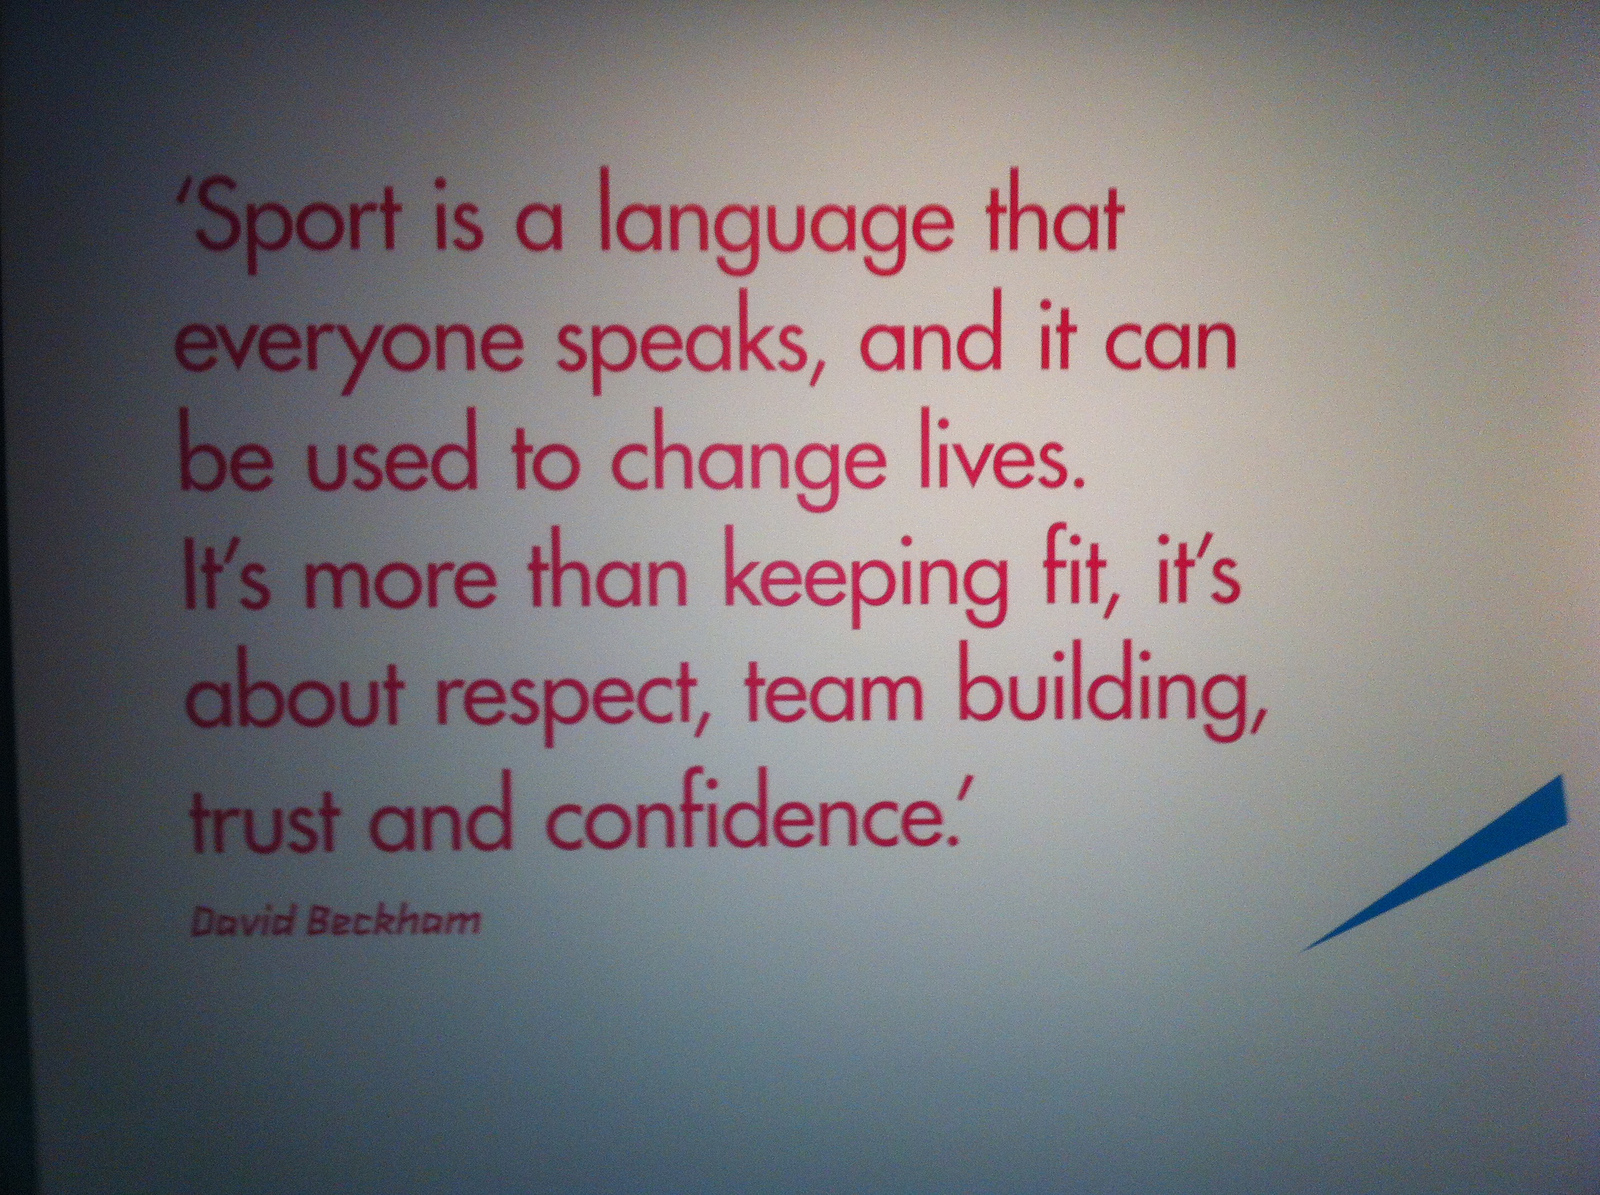 David Beckham's quote